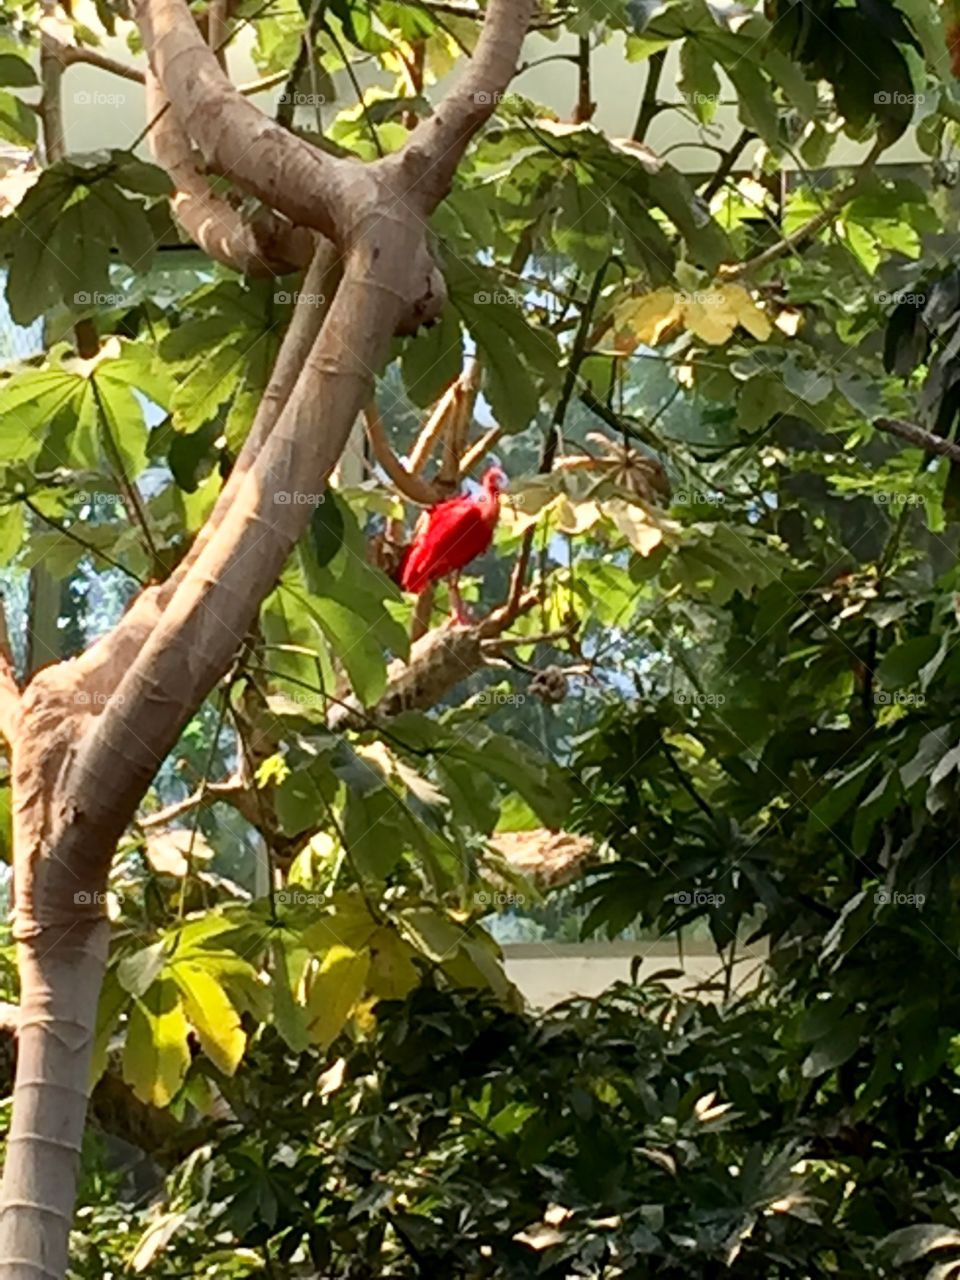 Strange bird in the trees